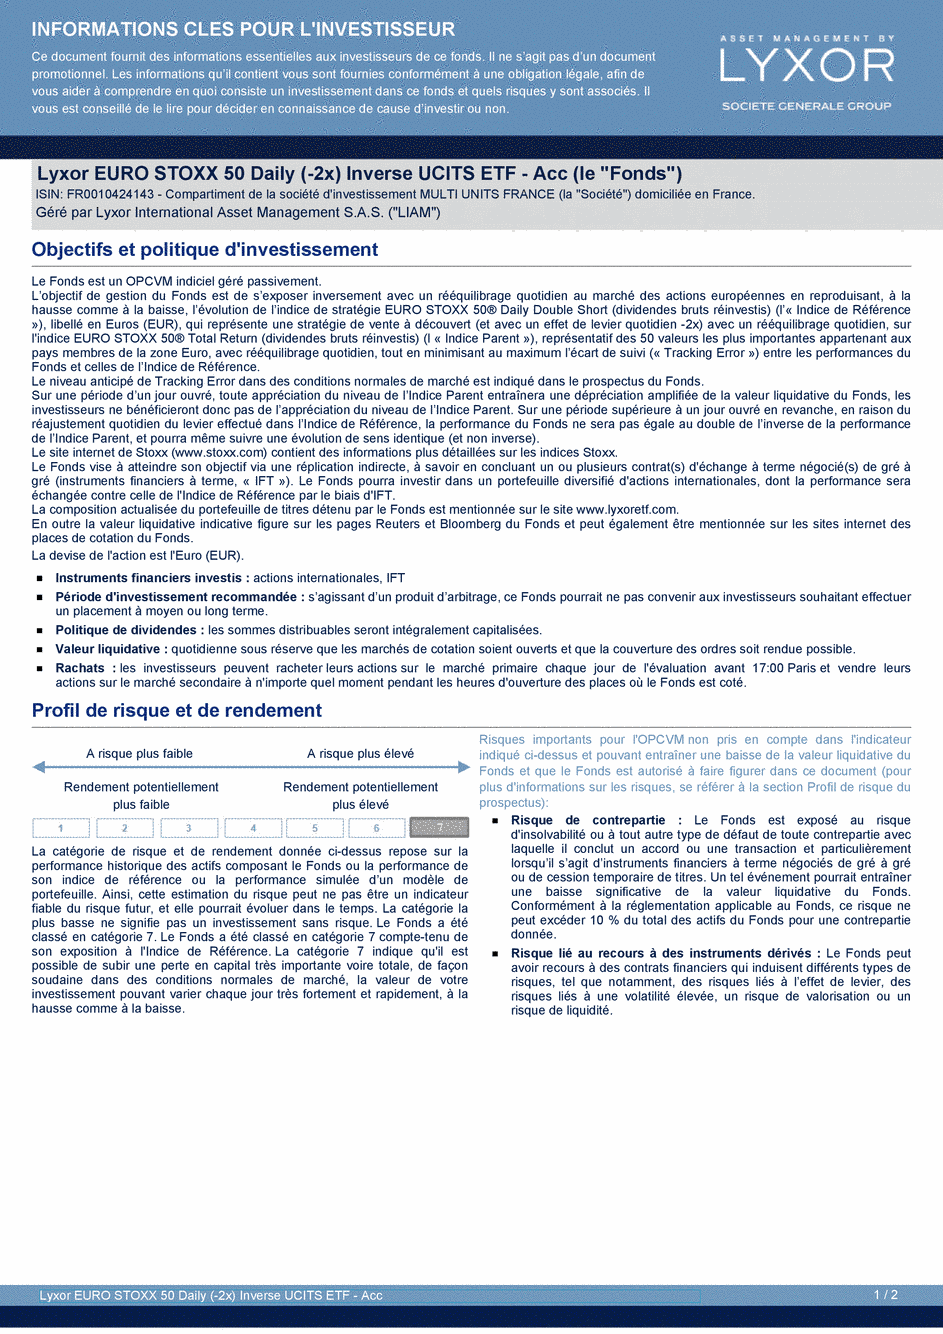 DICI Lyxor EURO STOXX 50 Daily (-2x) Inverse UCITS ETF - Acc - 19/02/2021 - Français